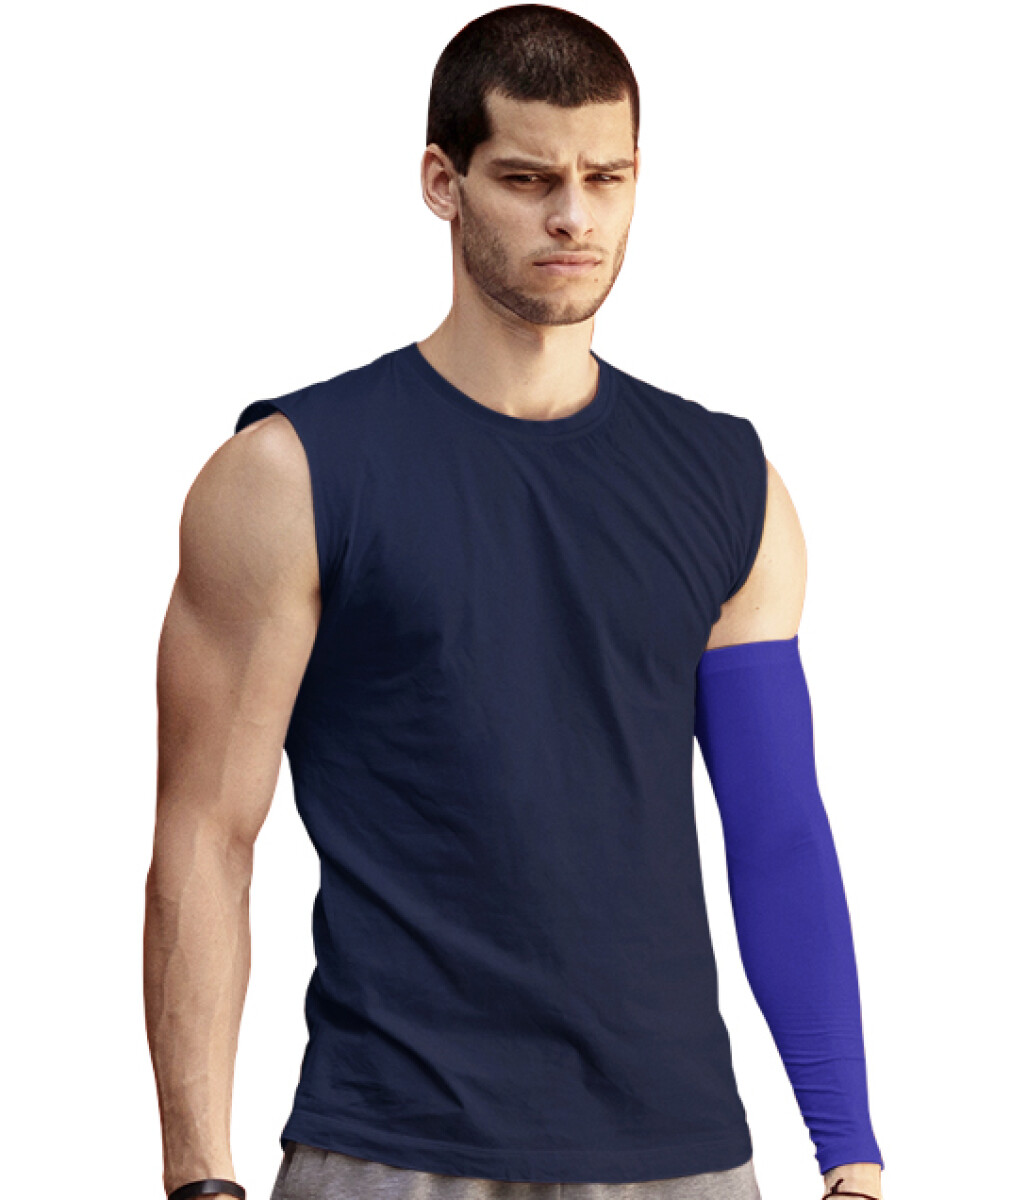 Camiseta a la base sin mangas - Azul marino 